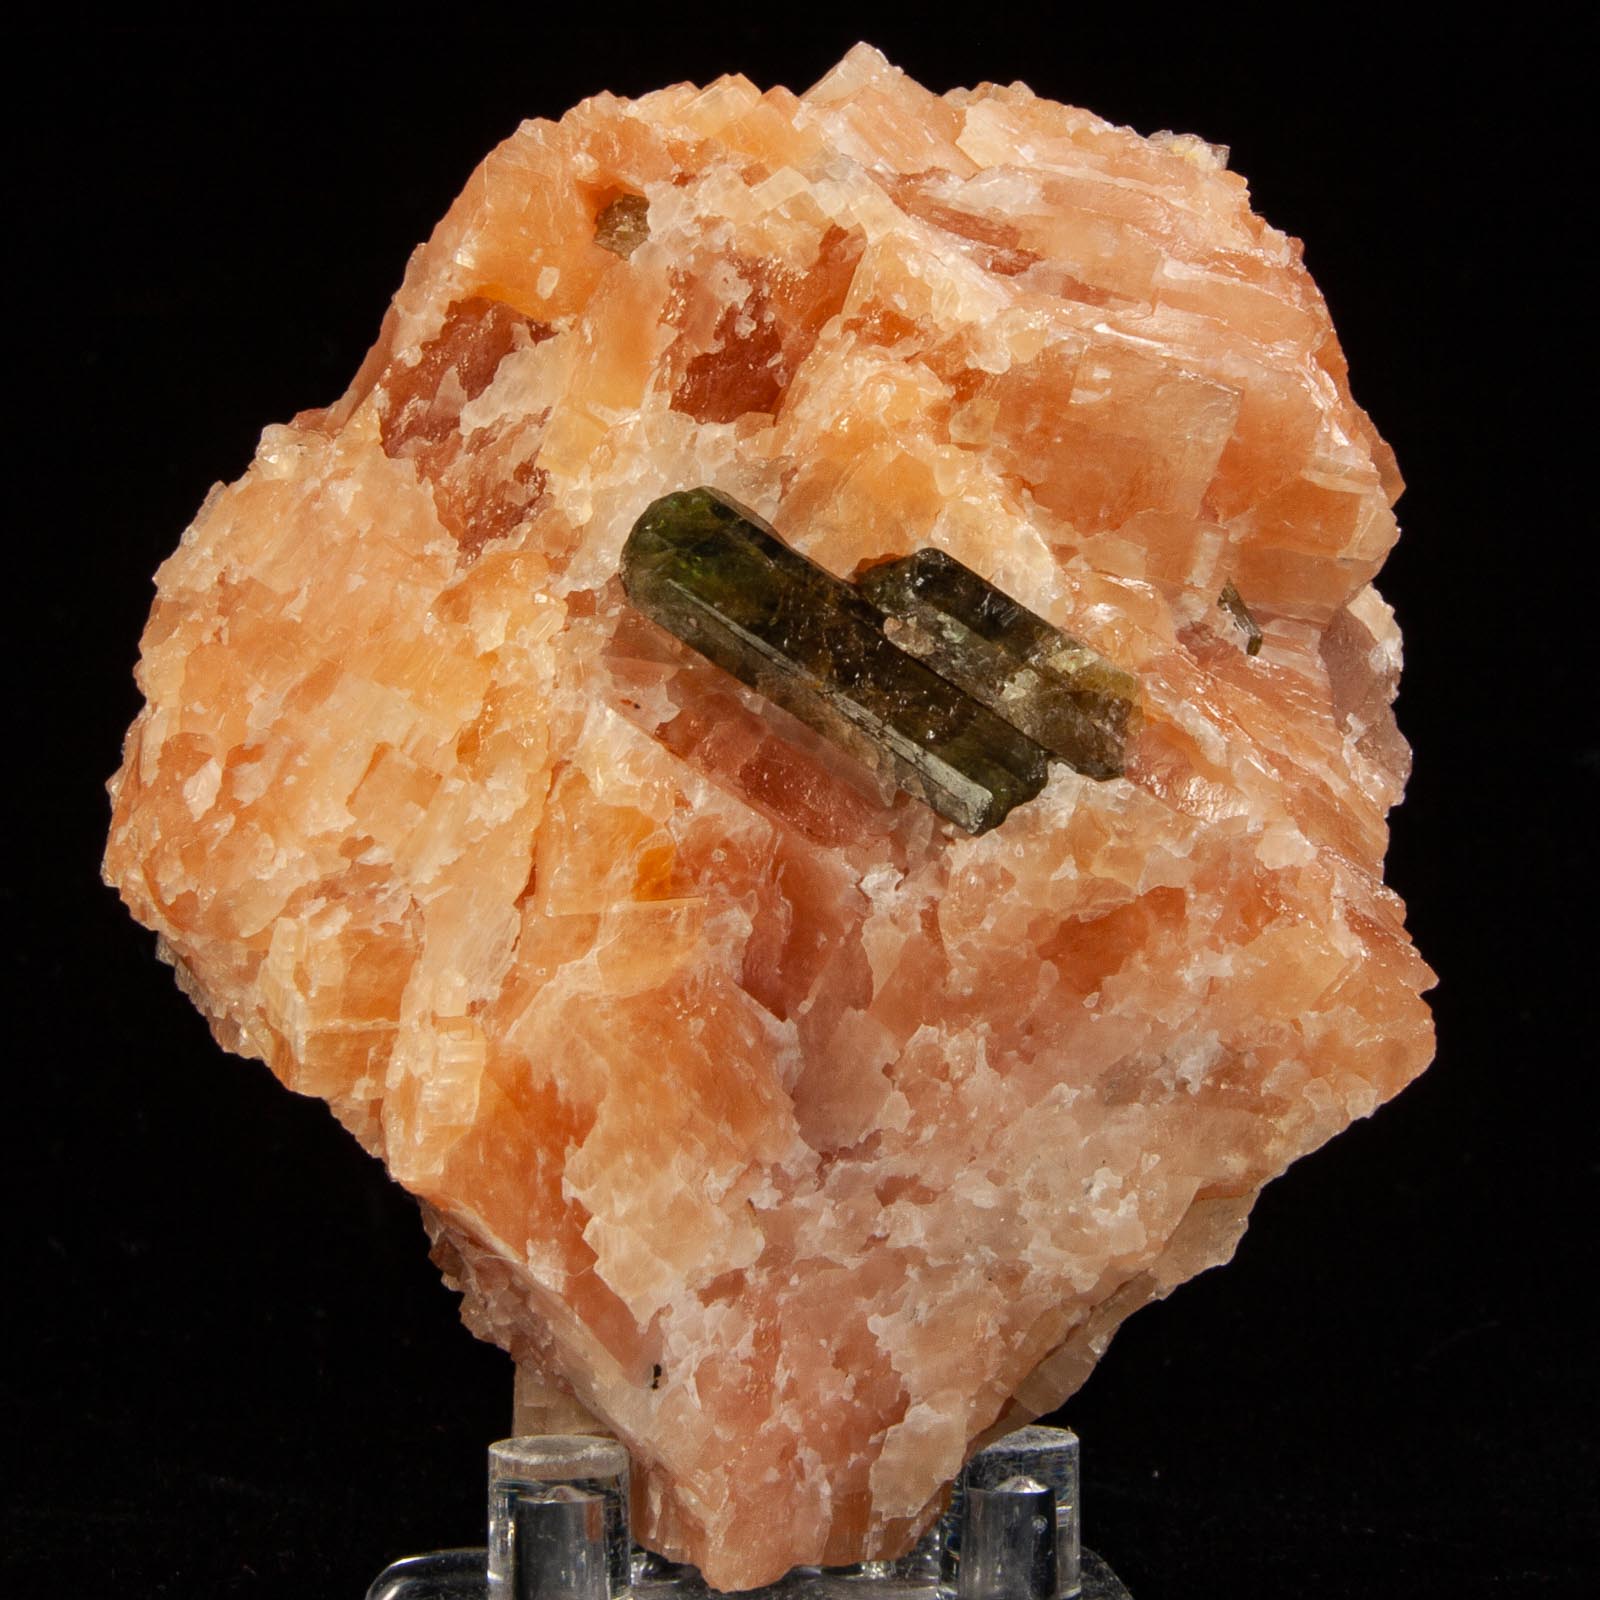 Apatite in Calcite Mineral Specimen